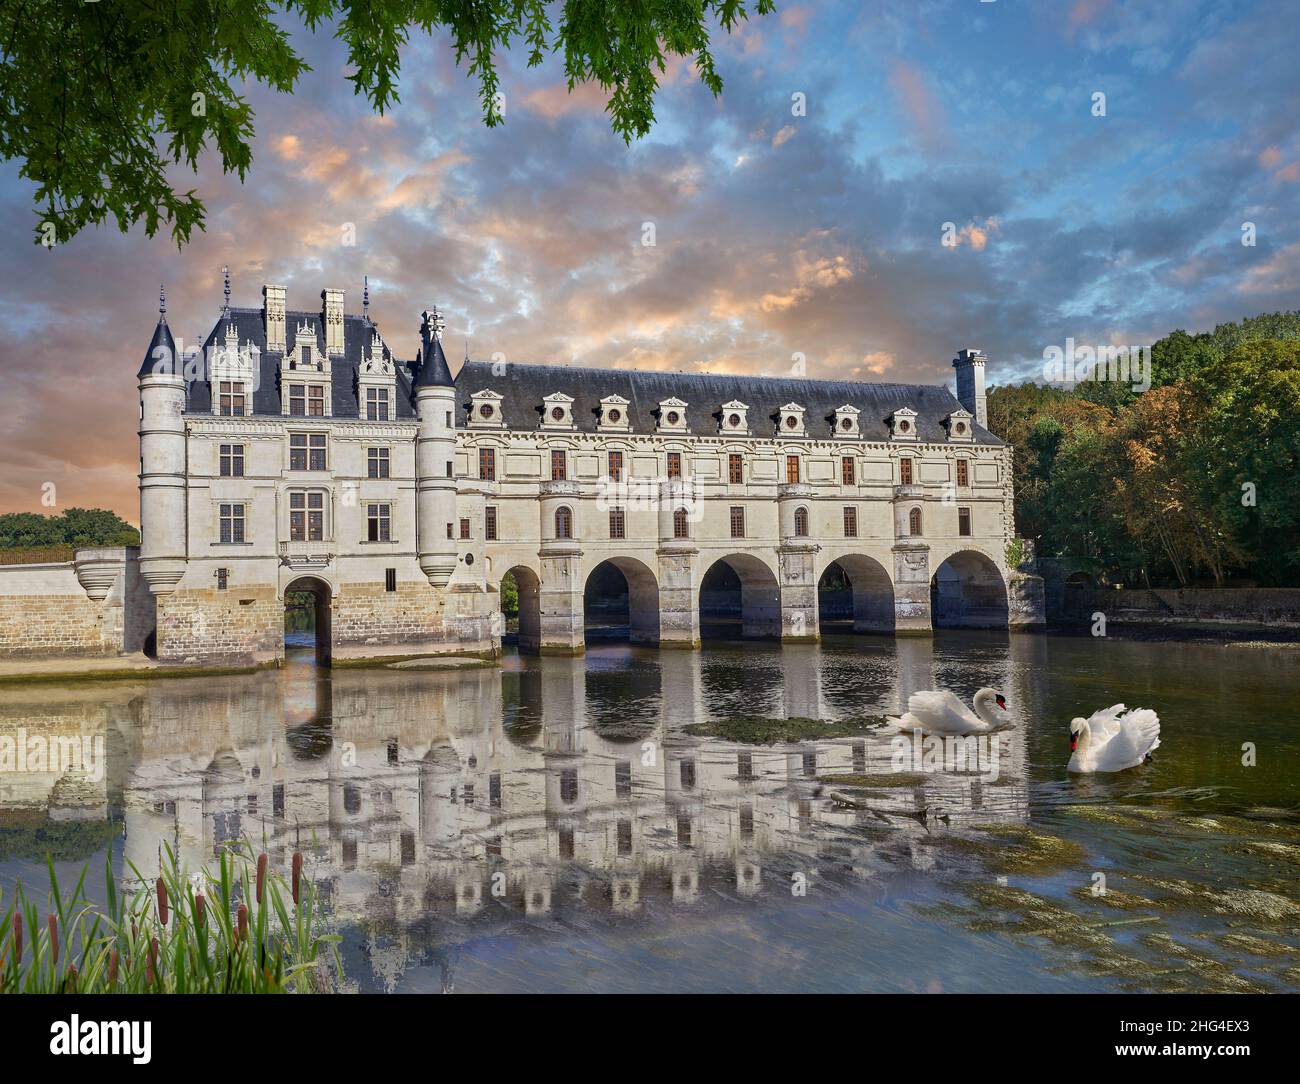 The Renaissance Chateau de Chenonceau spanning the river Cher, Indre-et-Loire, built in 1514–1522. The bridge over the river was built (1556-1559) to Stock Photo